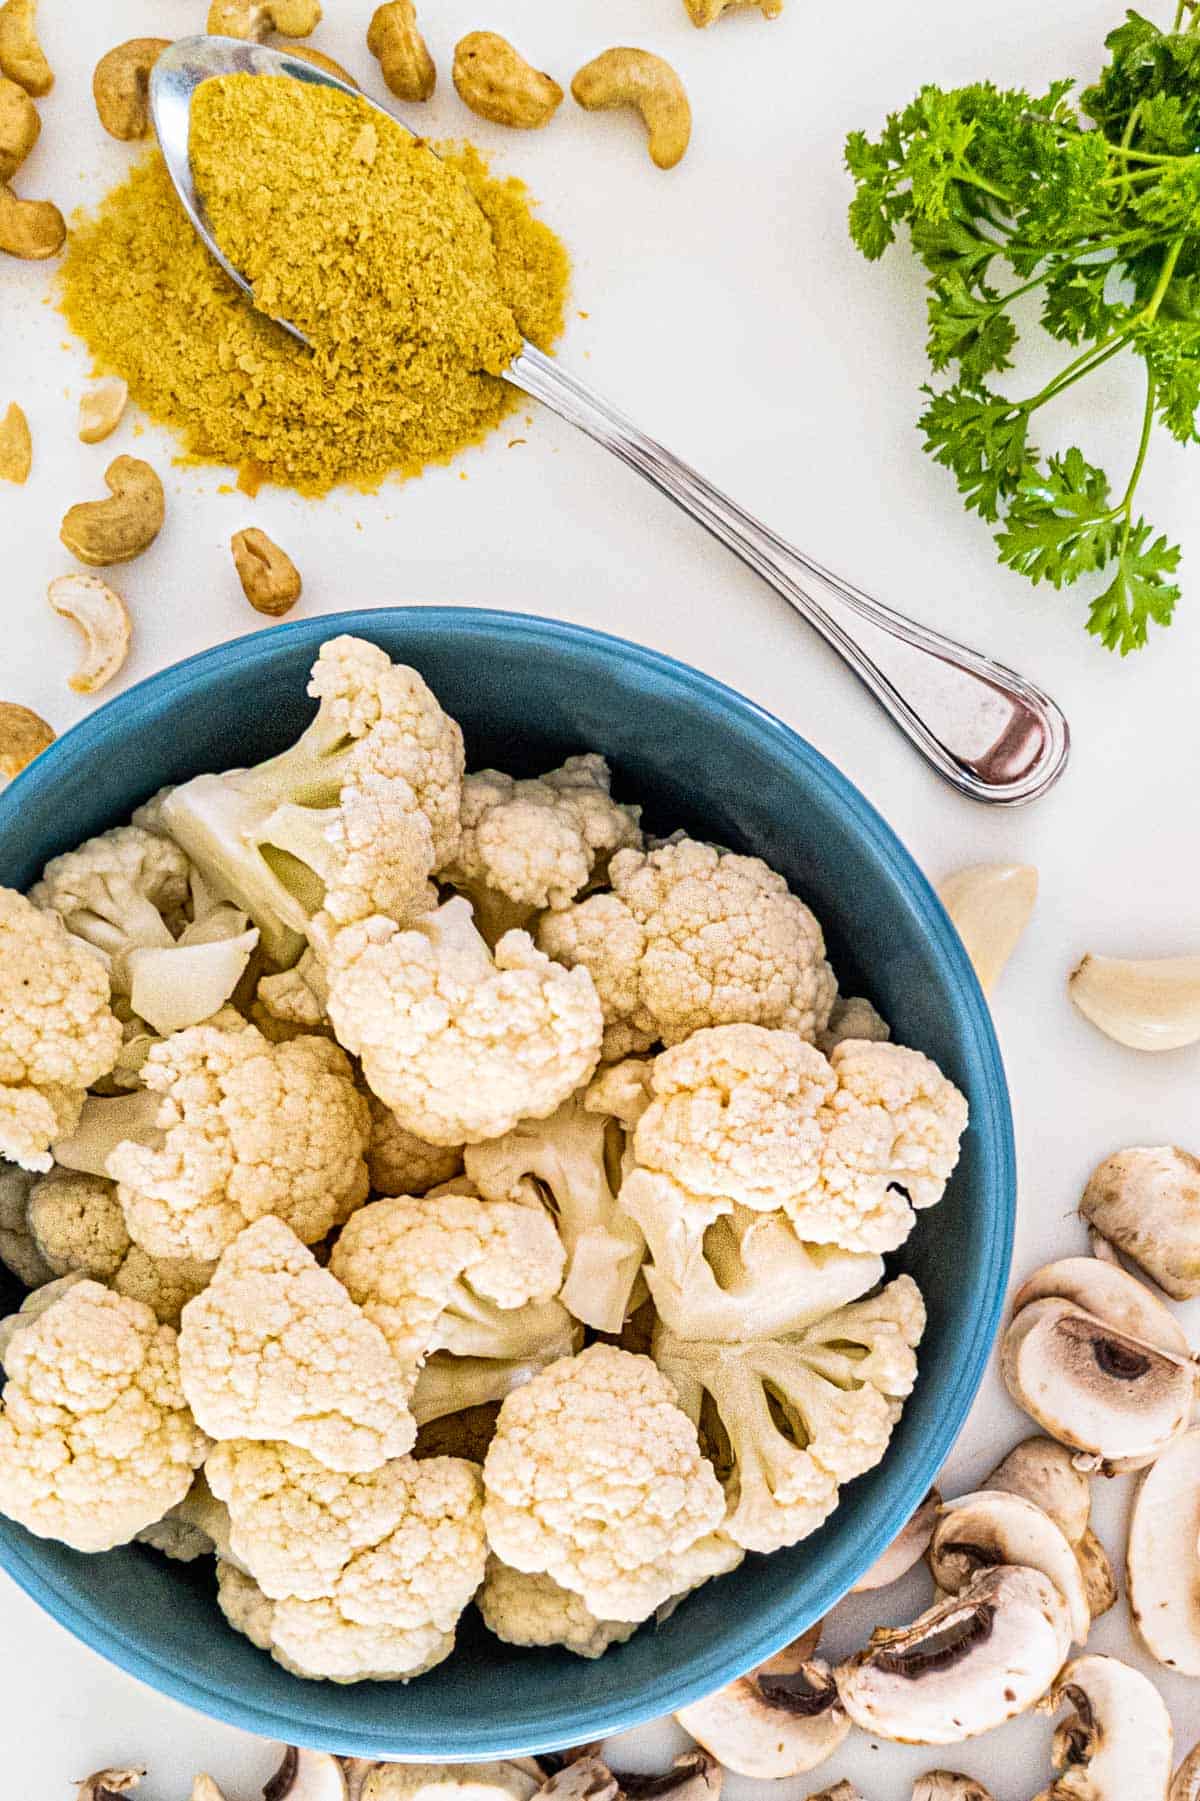 Cauliflower, mushroom, cashews, garlic cloves, parsley, and a spoon of nutritional yeast on a white board.